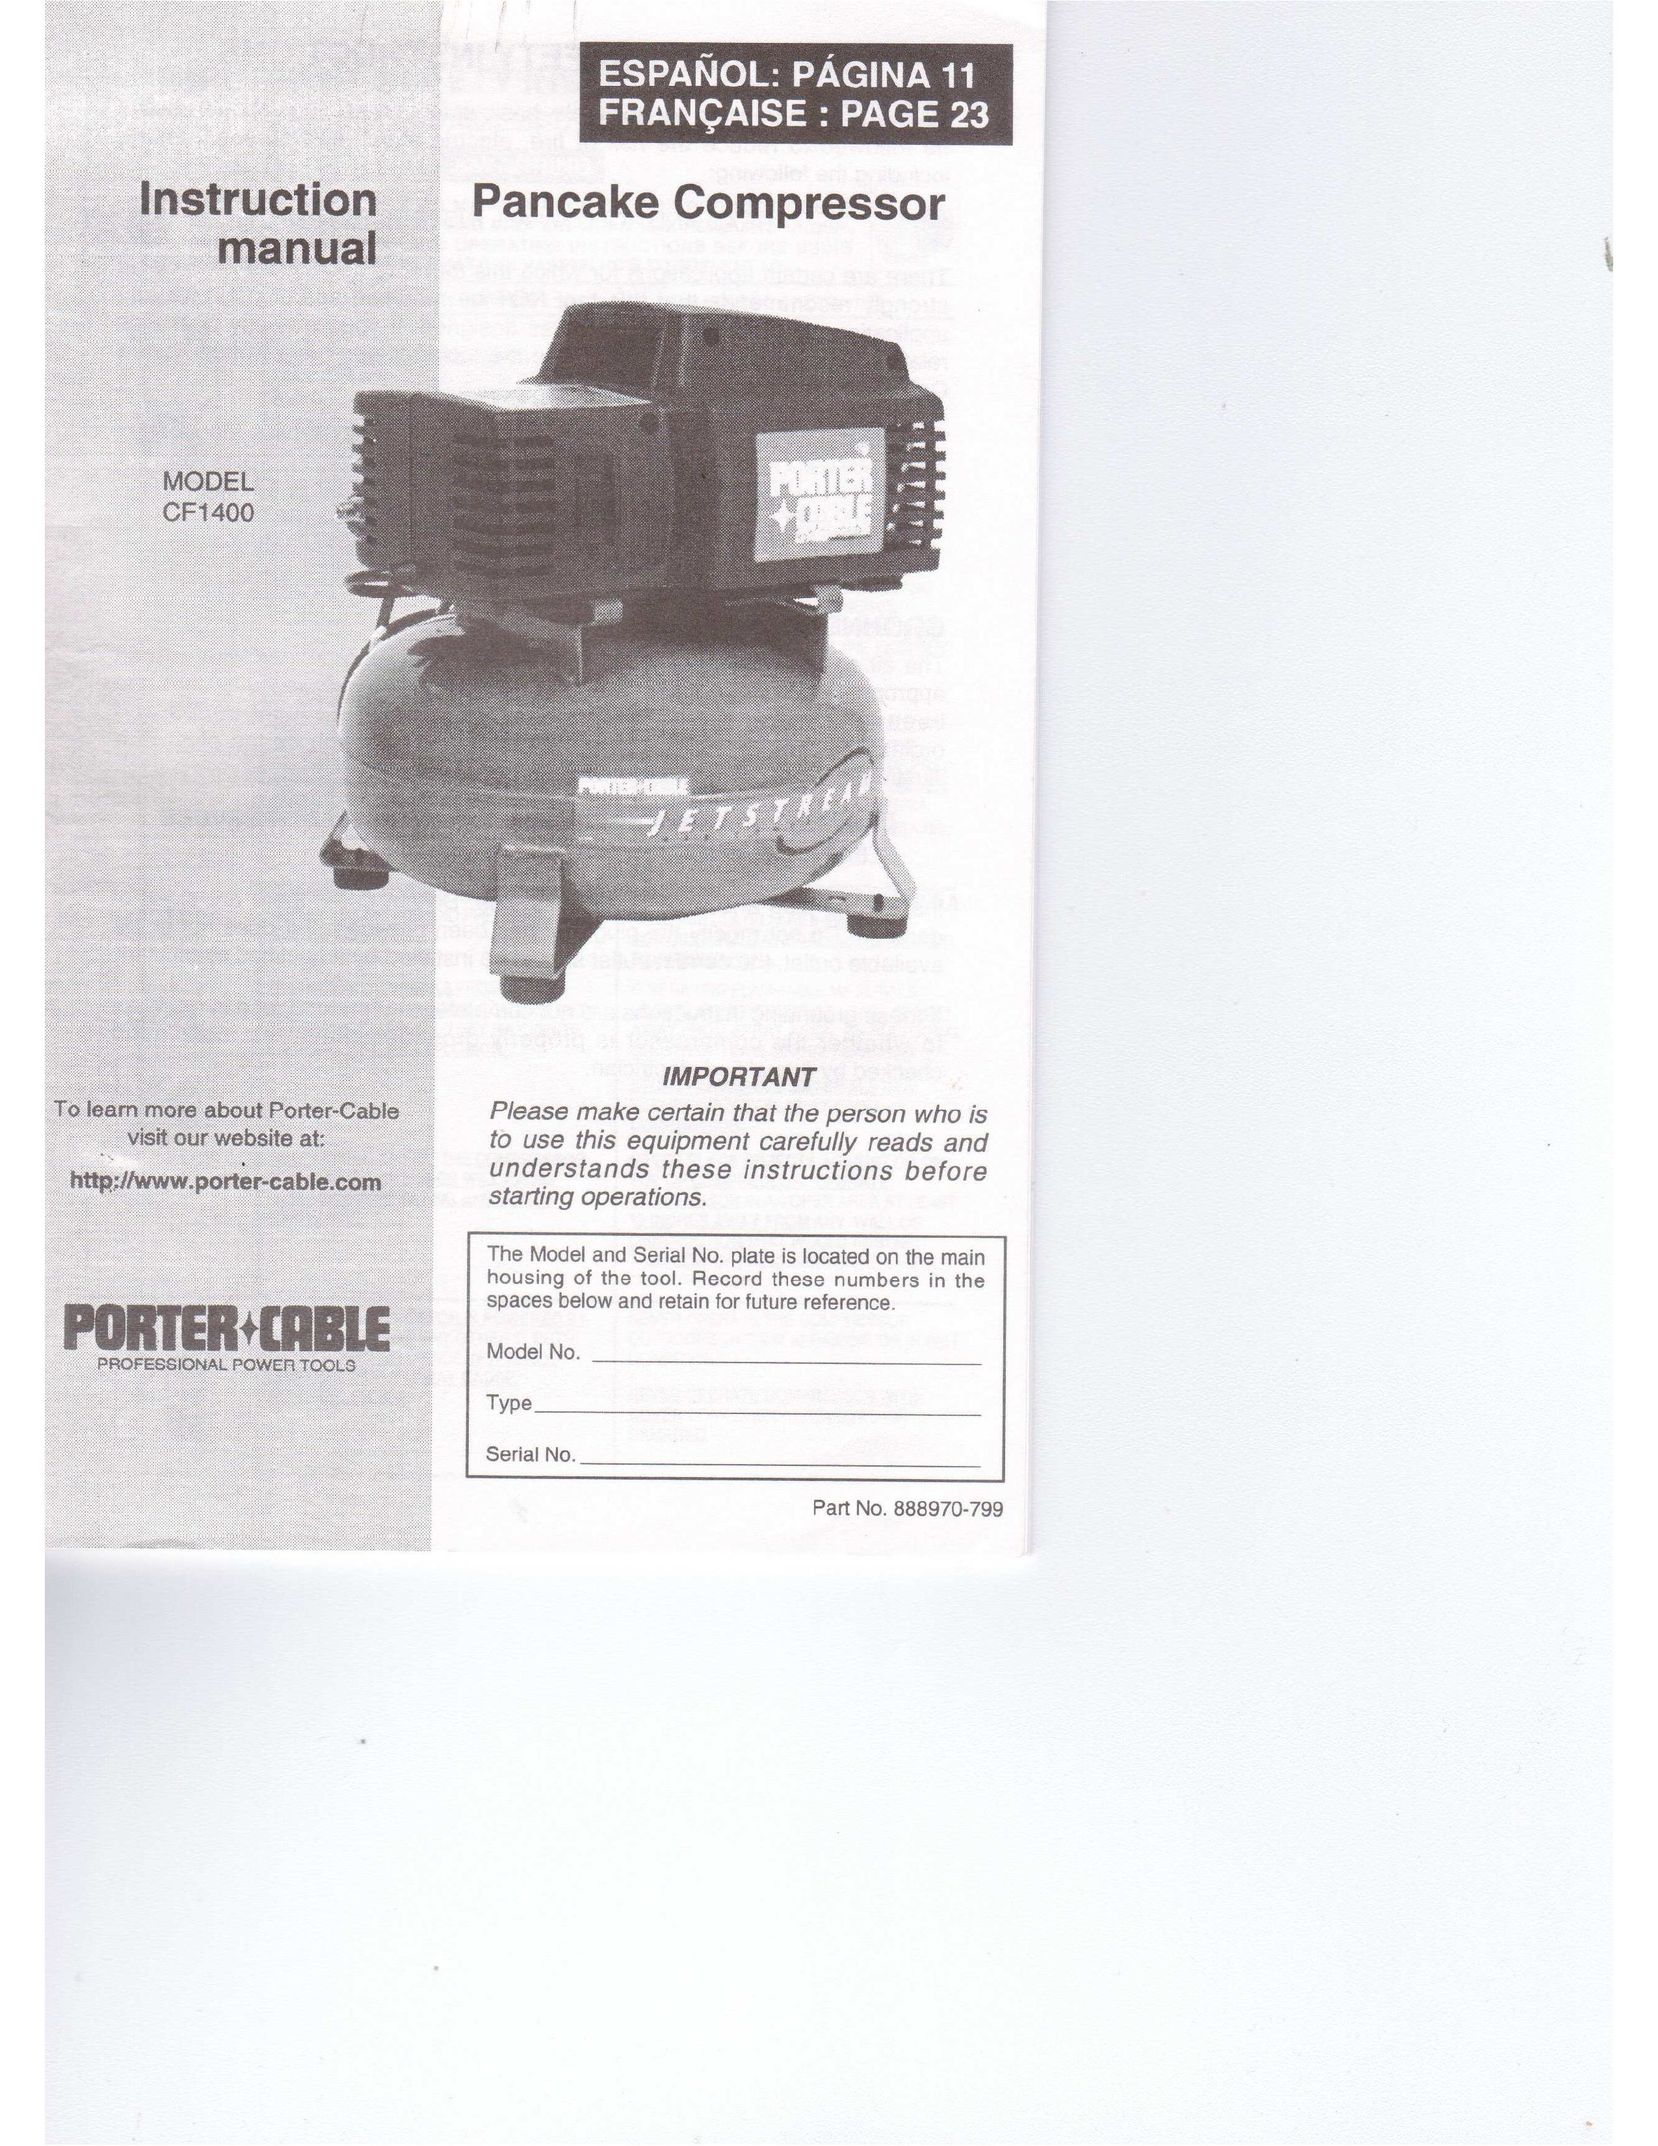 Porter-Cable 888970-799 Air Compressor User Manual